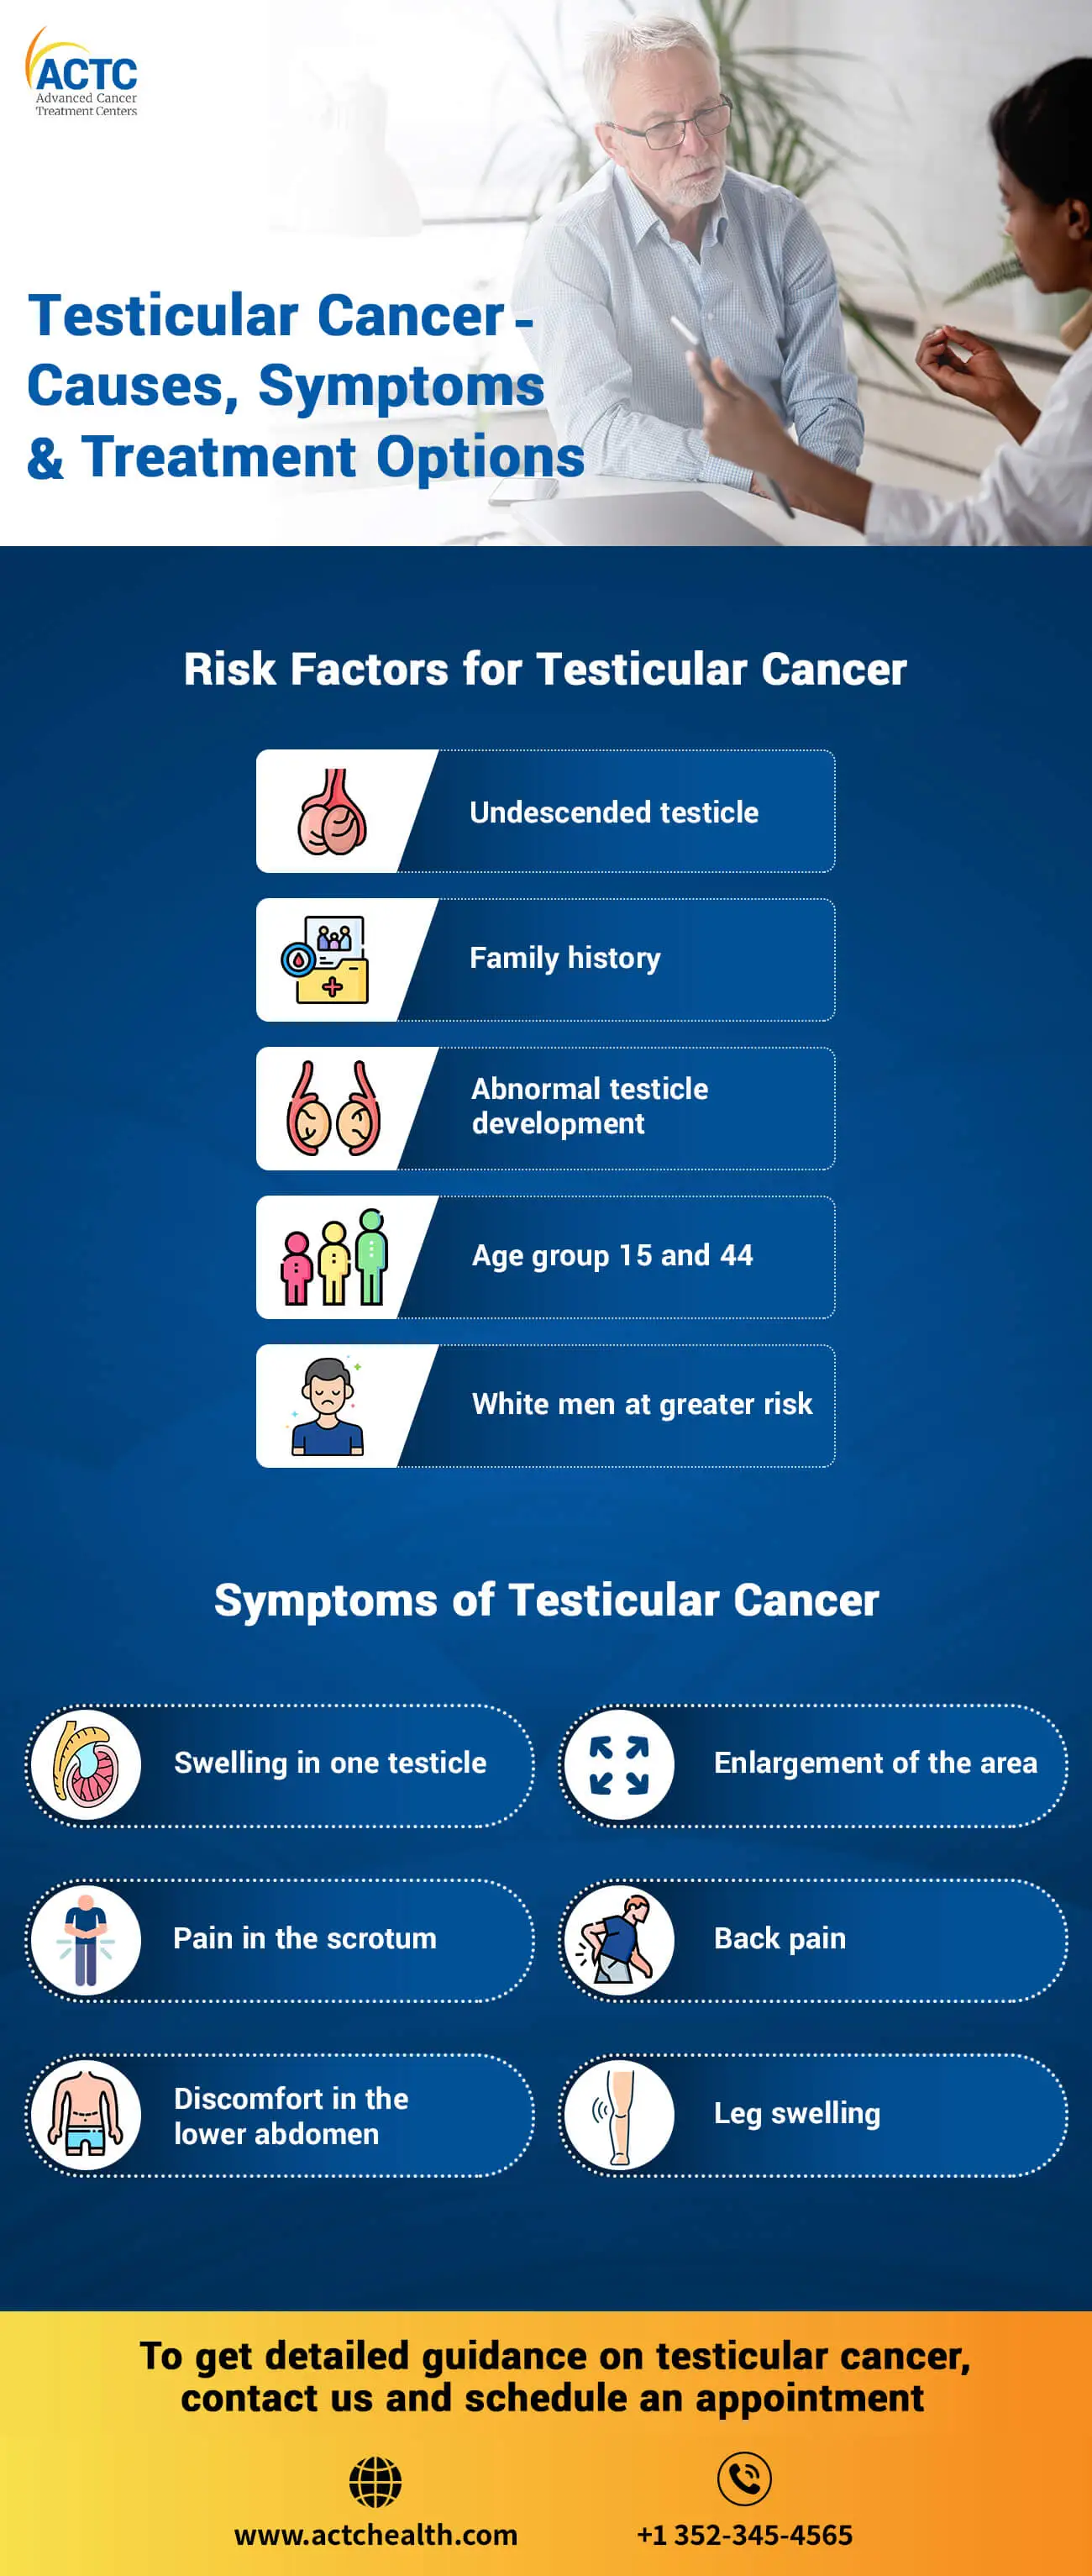 Symptoms of Testicular Cancer